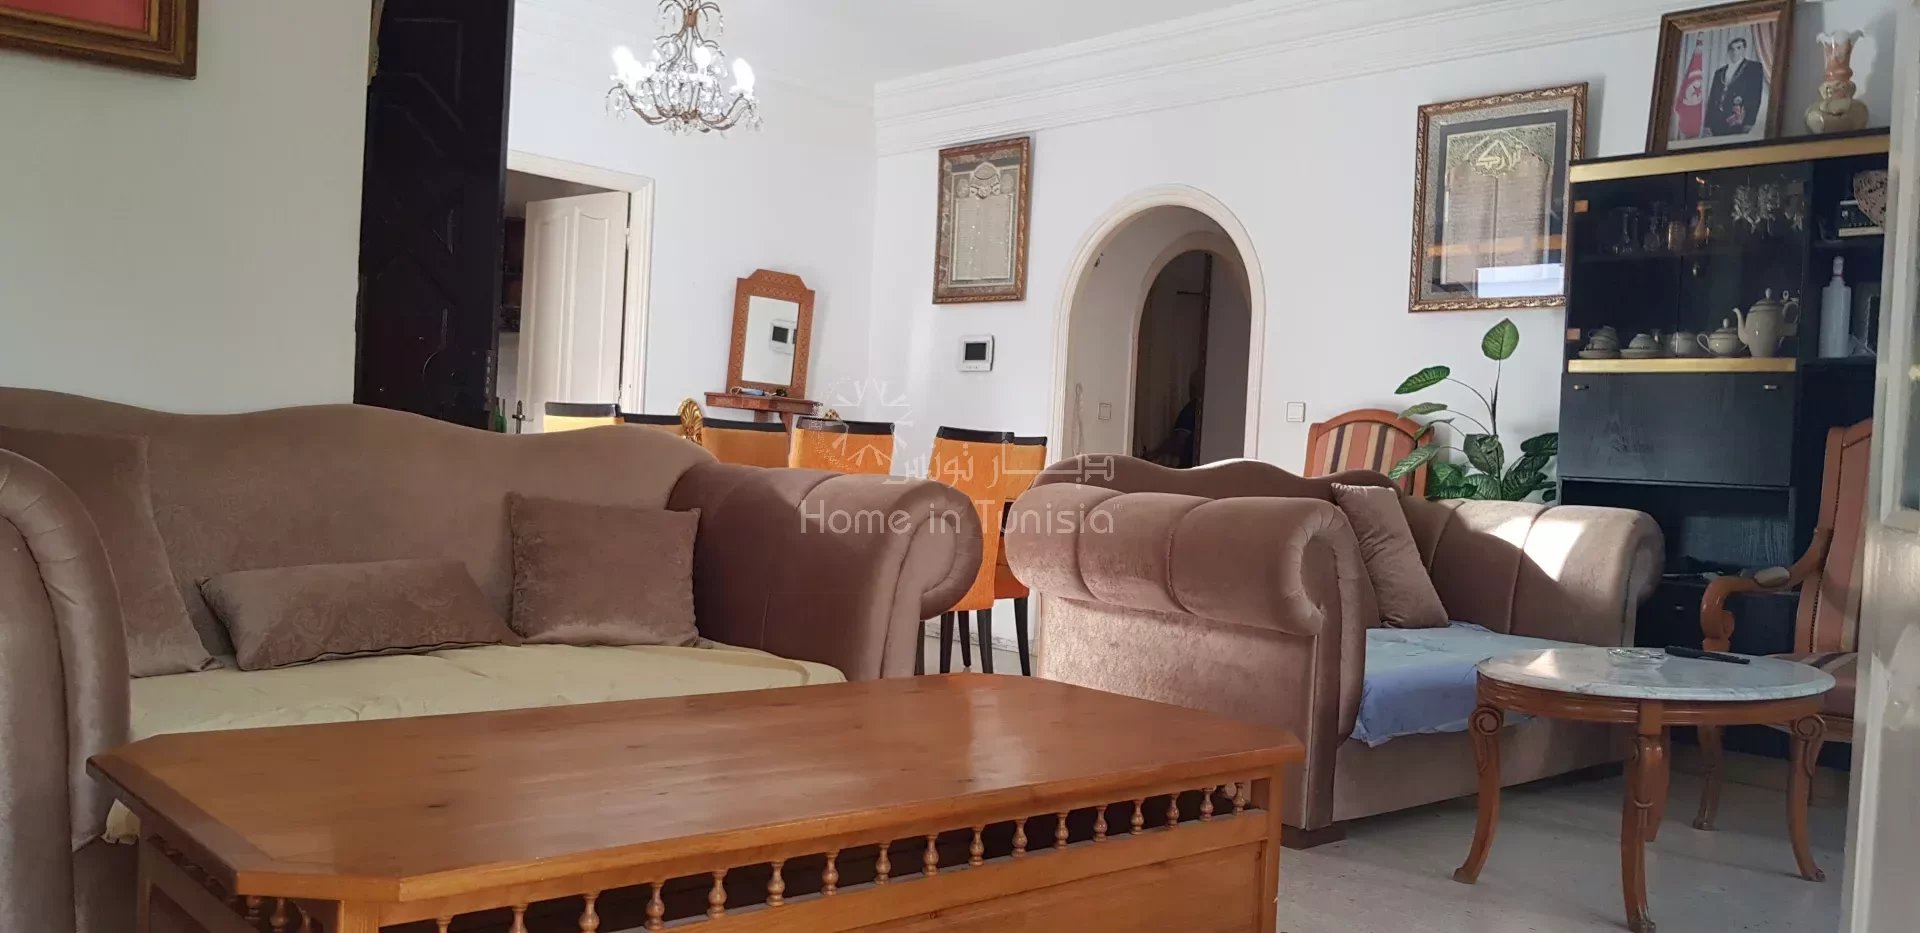 Villa a vendre a khezama ouest